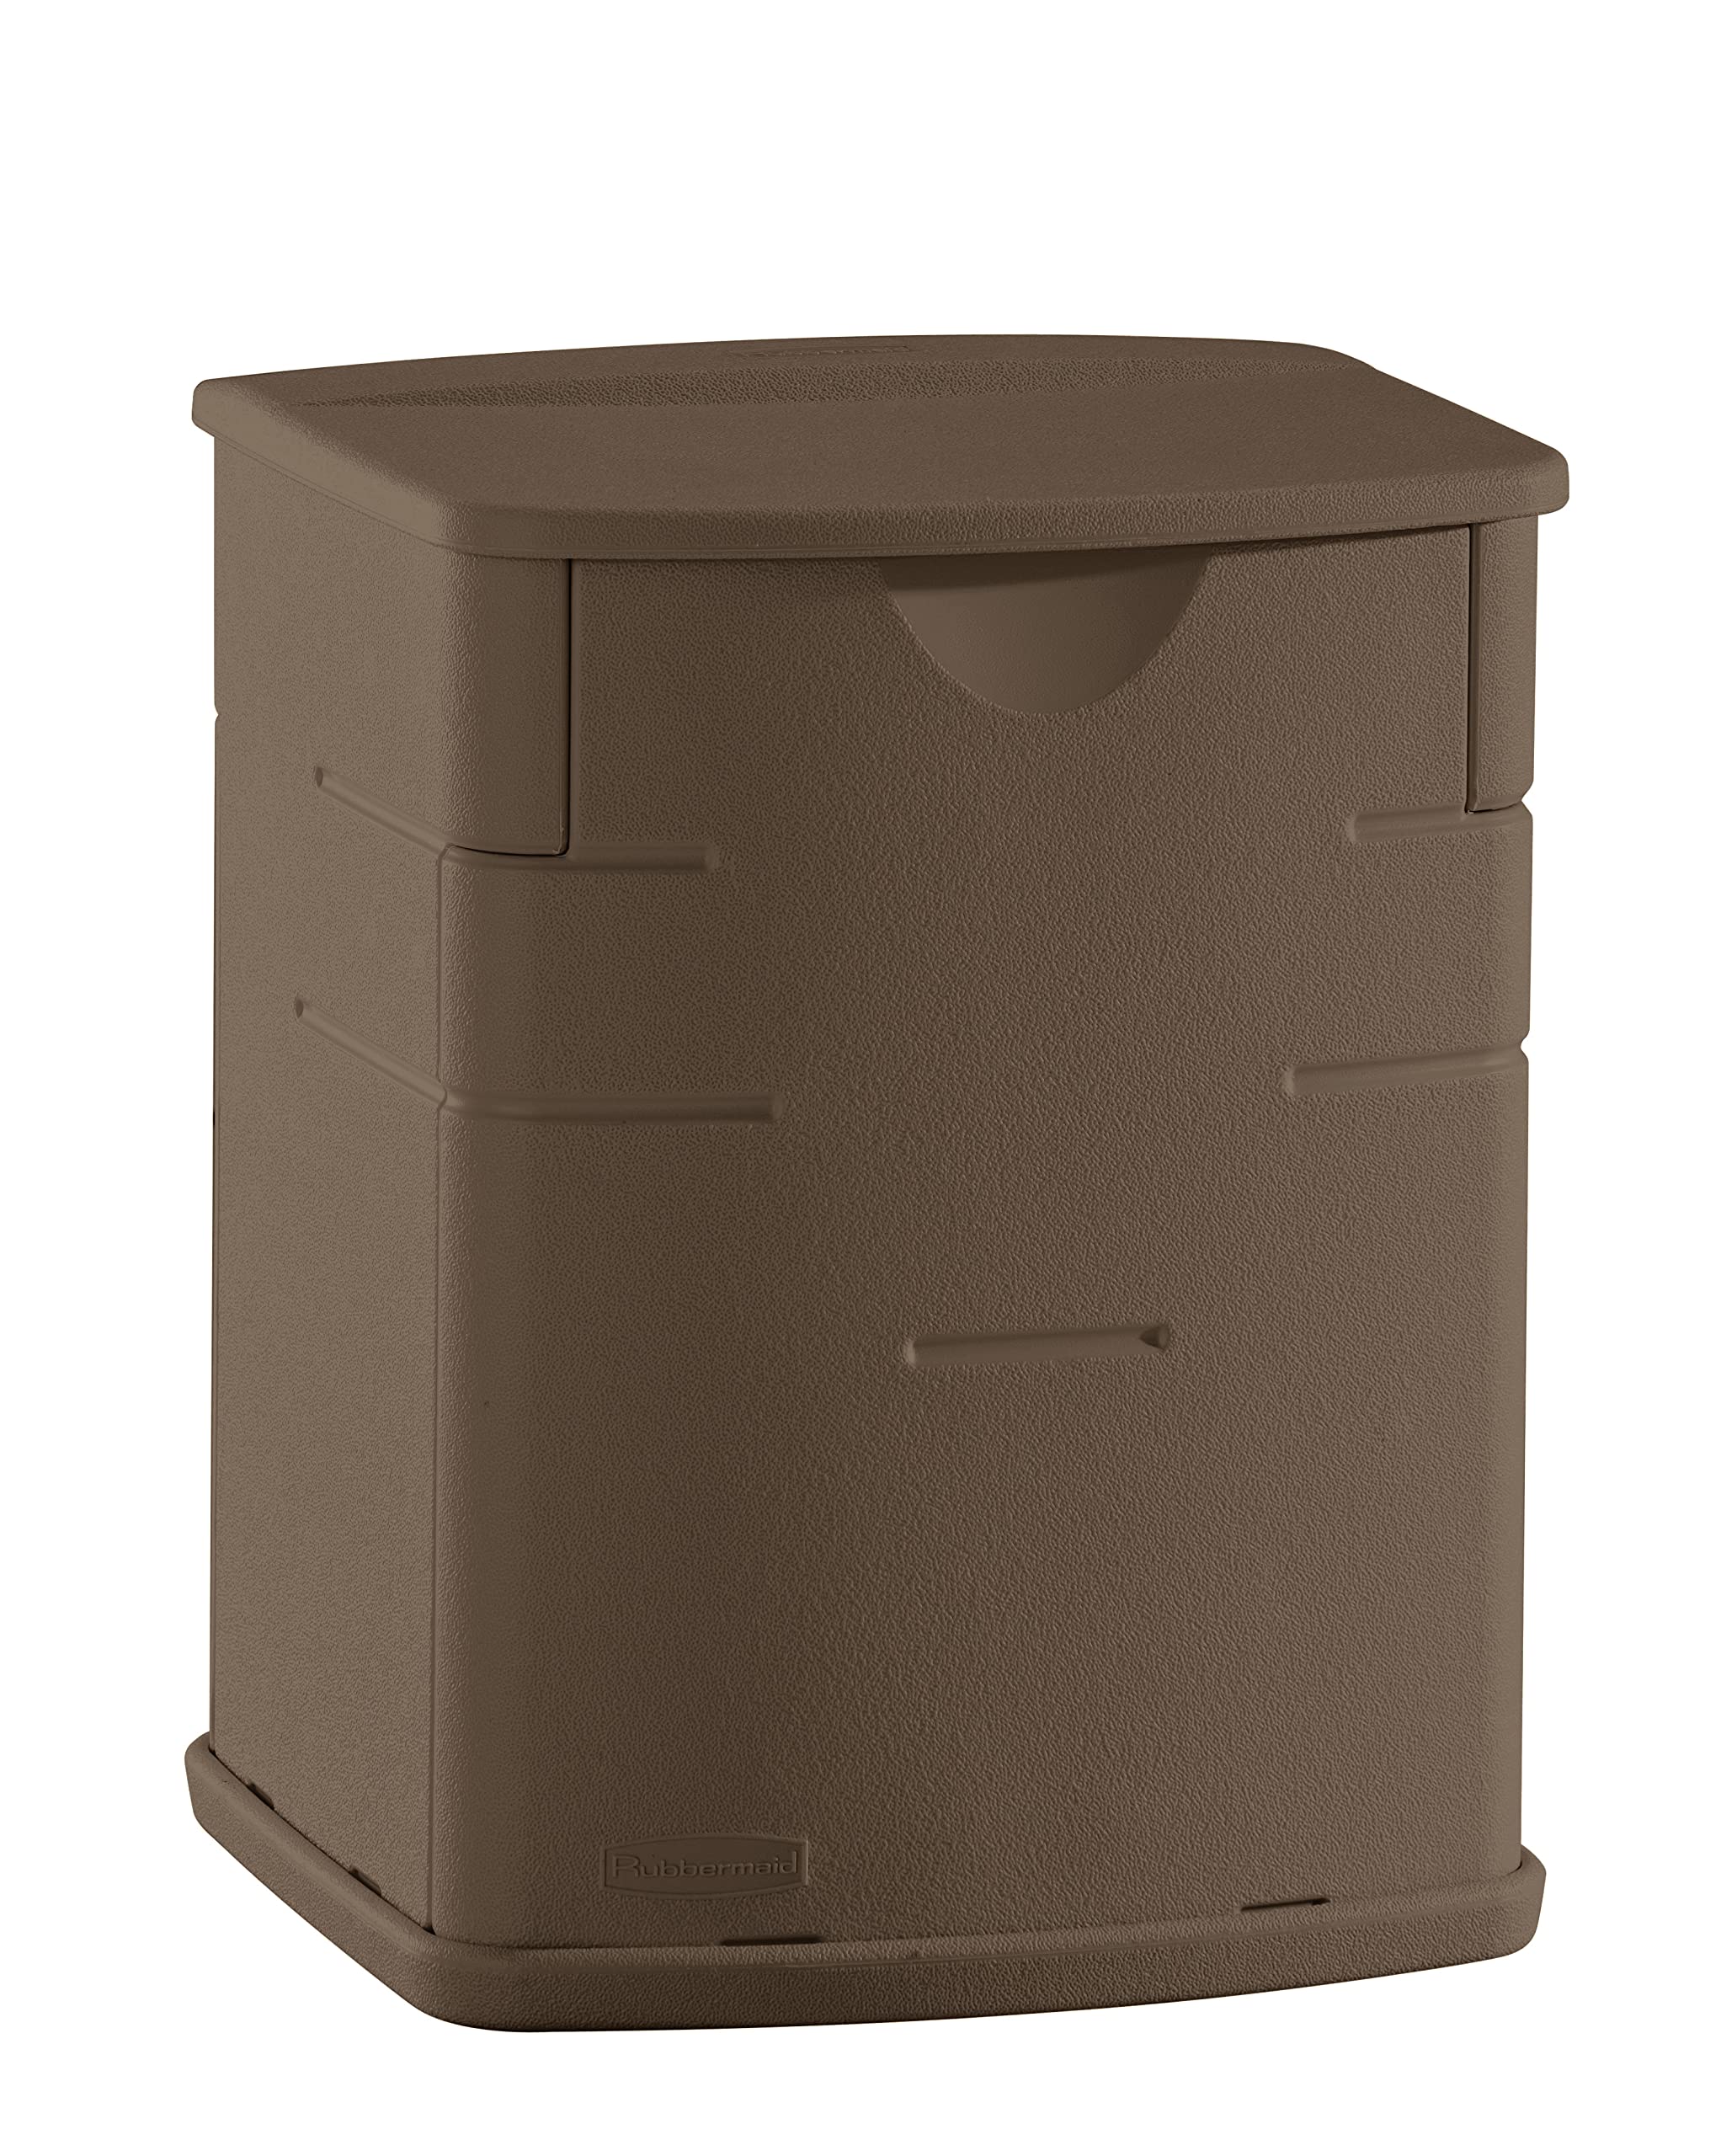 19.2-Gallon Rubbermaid Mini Outdoor Garden Storage Deck Box (Mocha) $32 + Free Shipping w/ Prime or on $35+